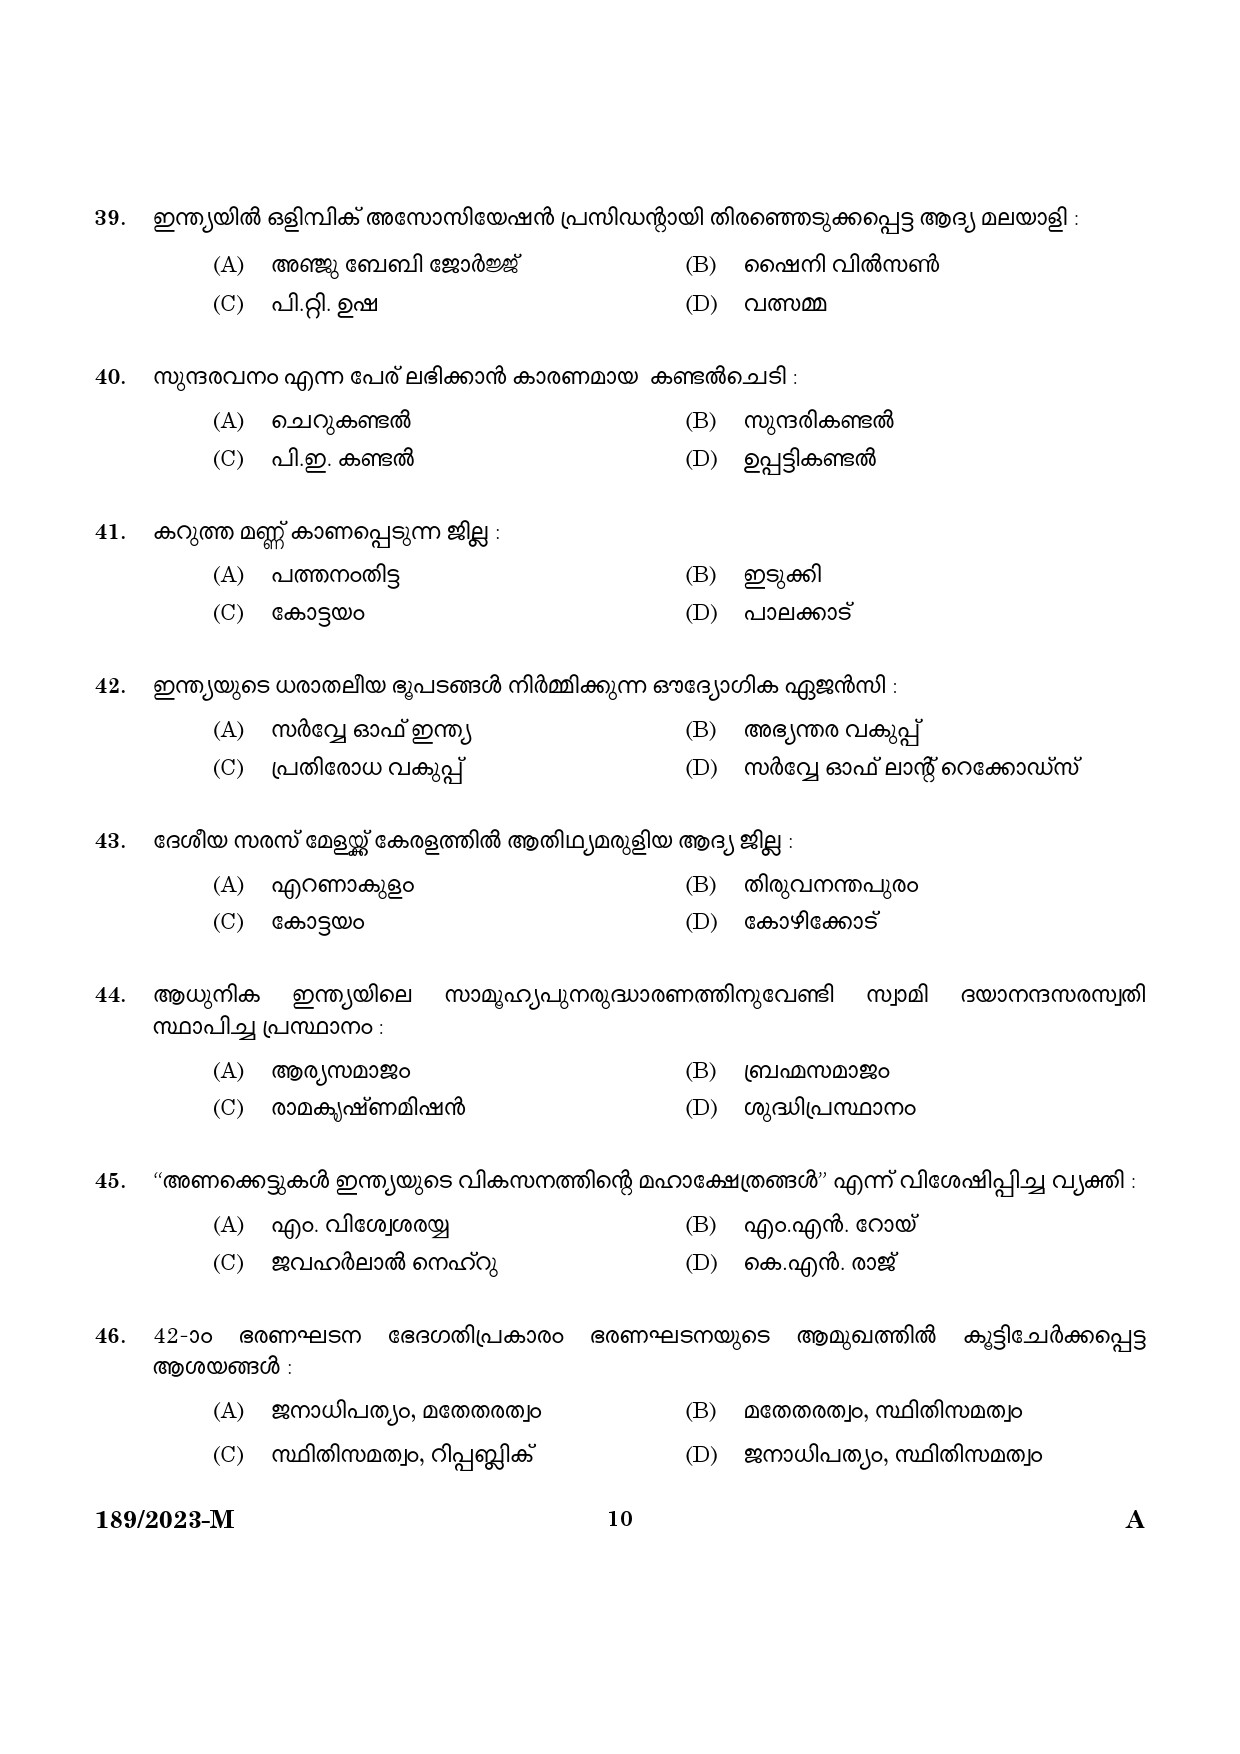 KPSC LGS Malayalam Exam 2023 Code 1892023 M 8